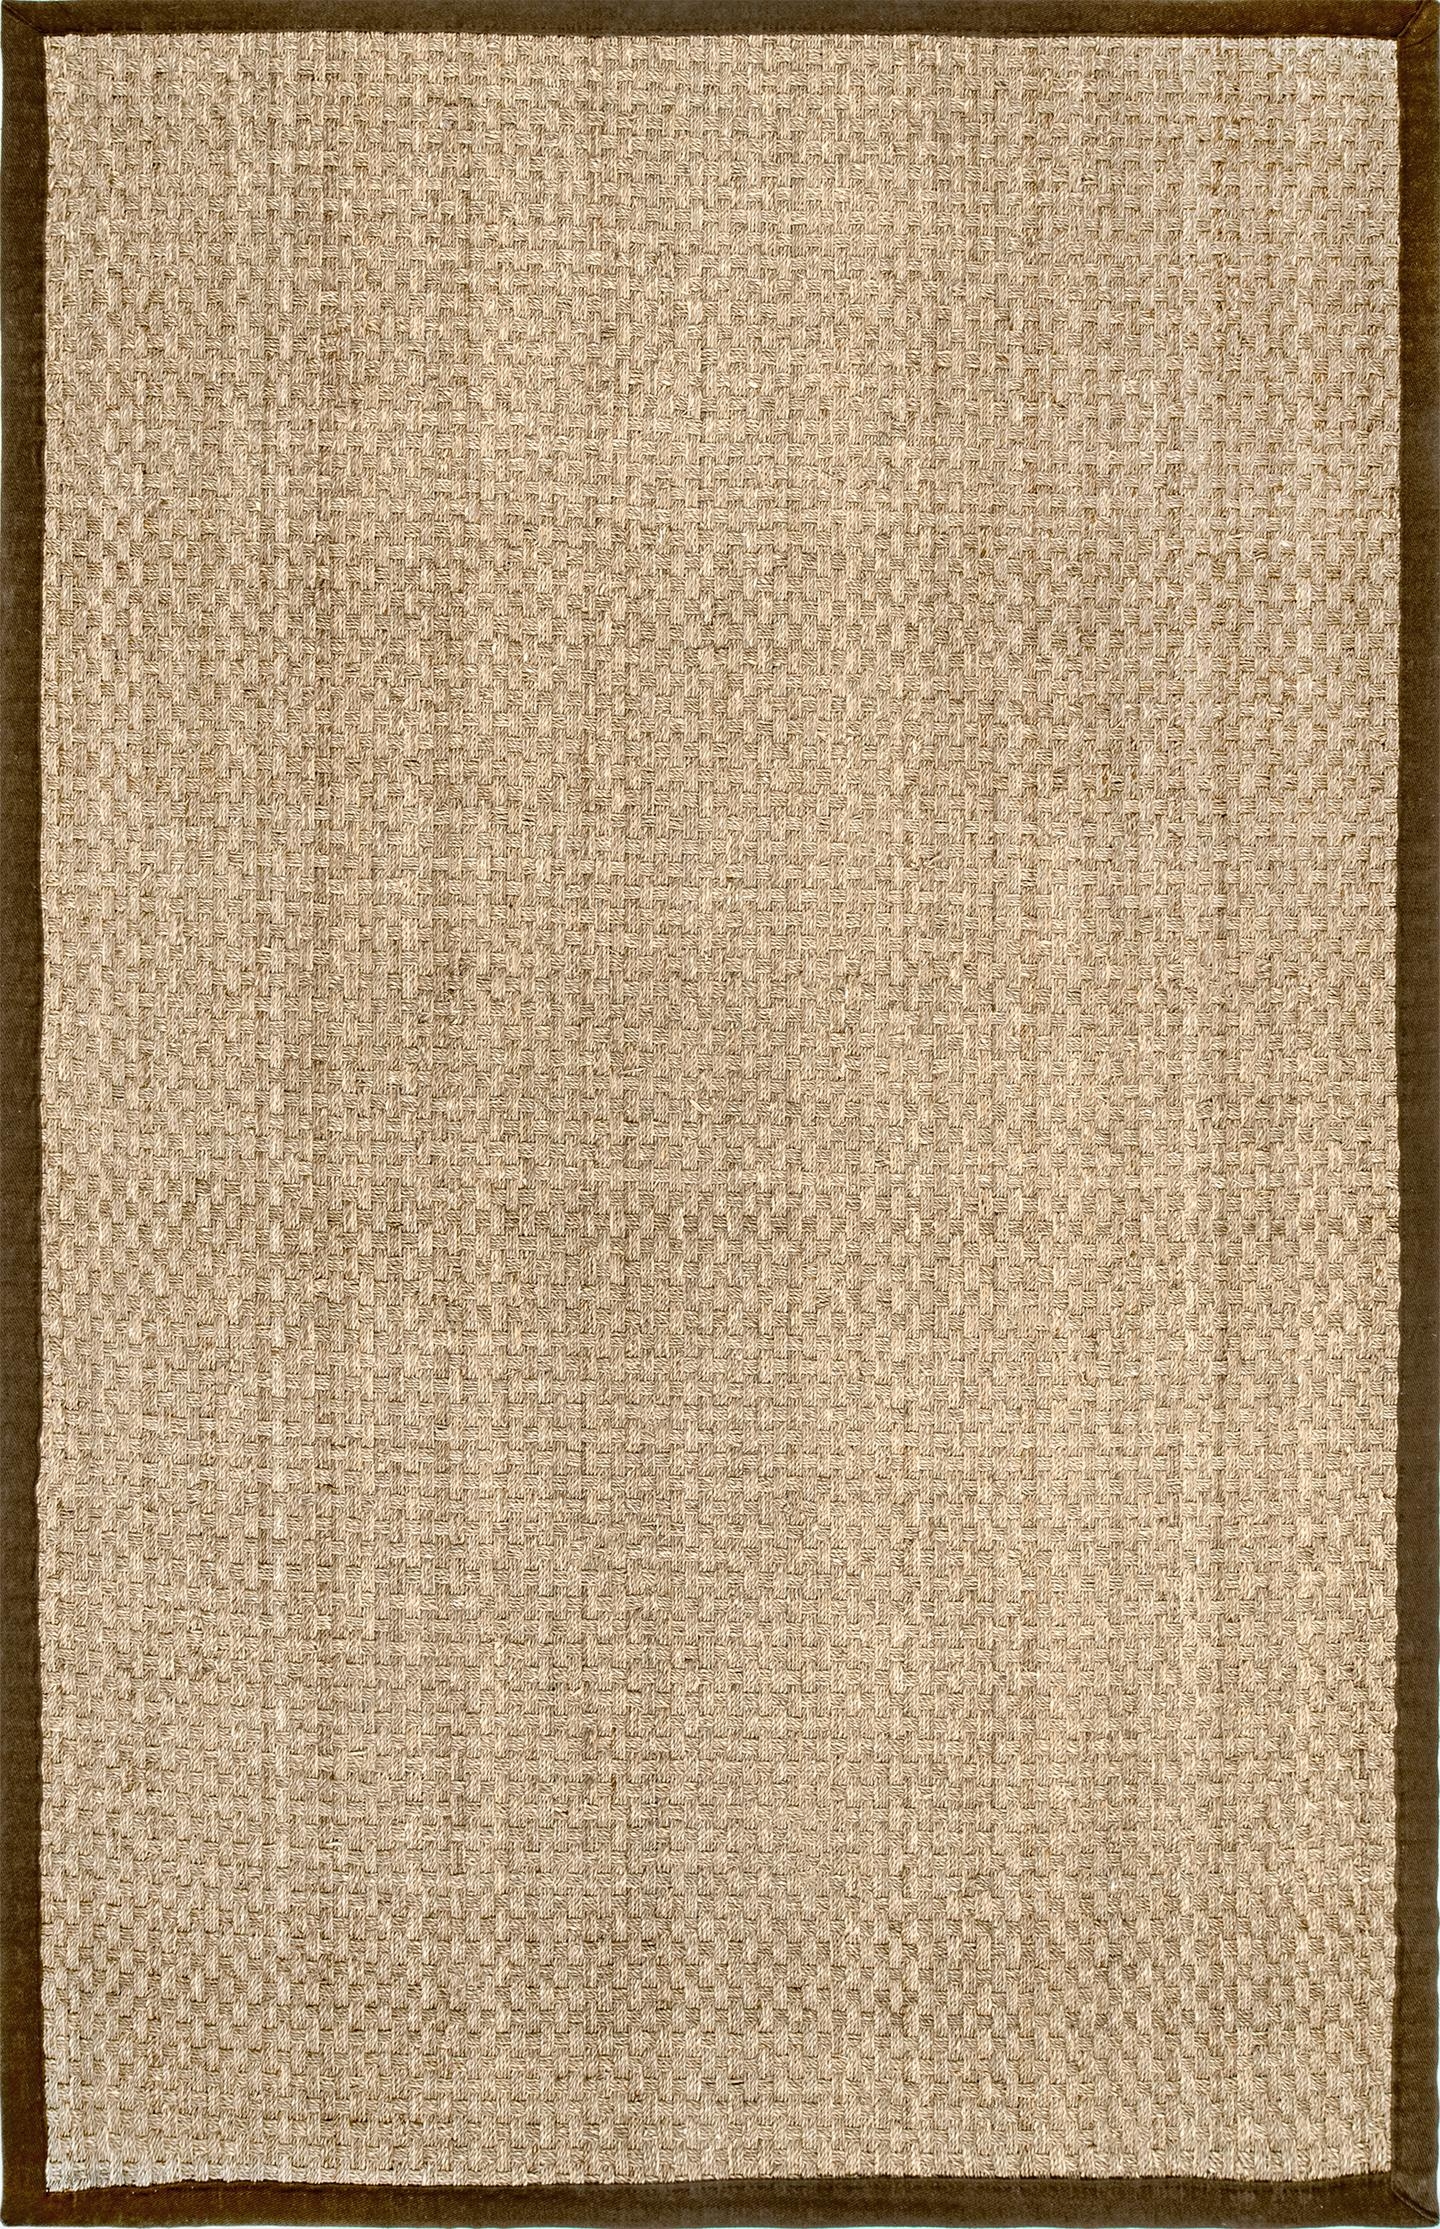 Hesse Checker Weave Seagrass Indoor/Outdoor Area Rug - Image 1